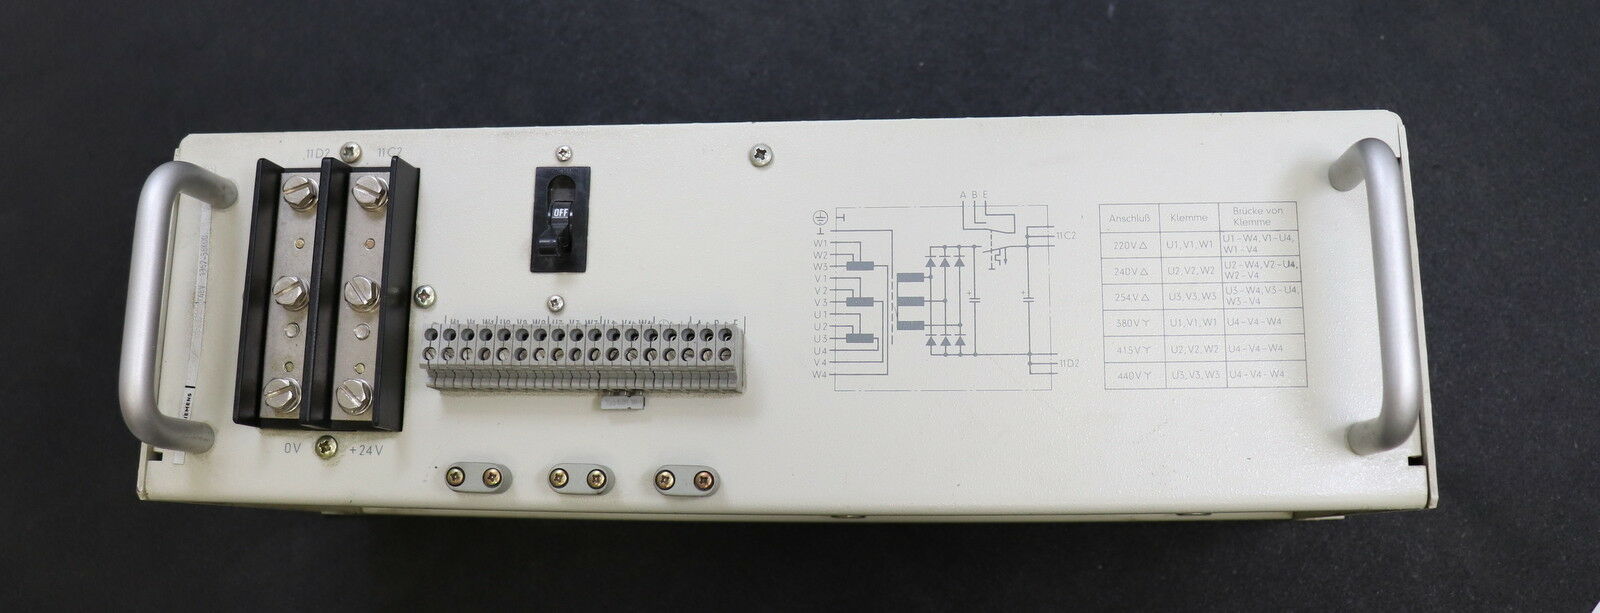 SIEMENS Einbau-Netzgerät System SVS2 6EV1362-5BK00 Typ D220, 380 G24 / 40 WG